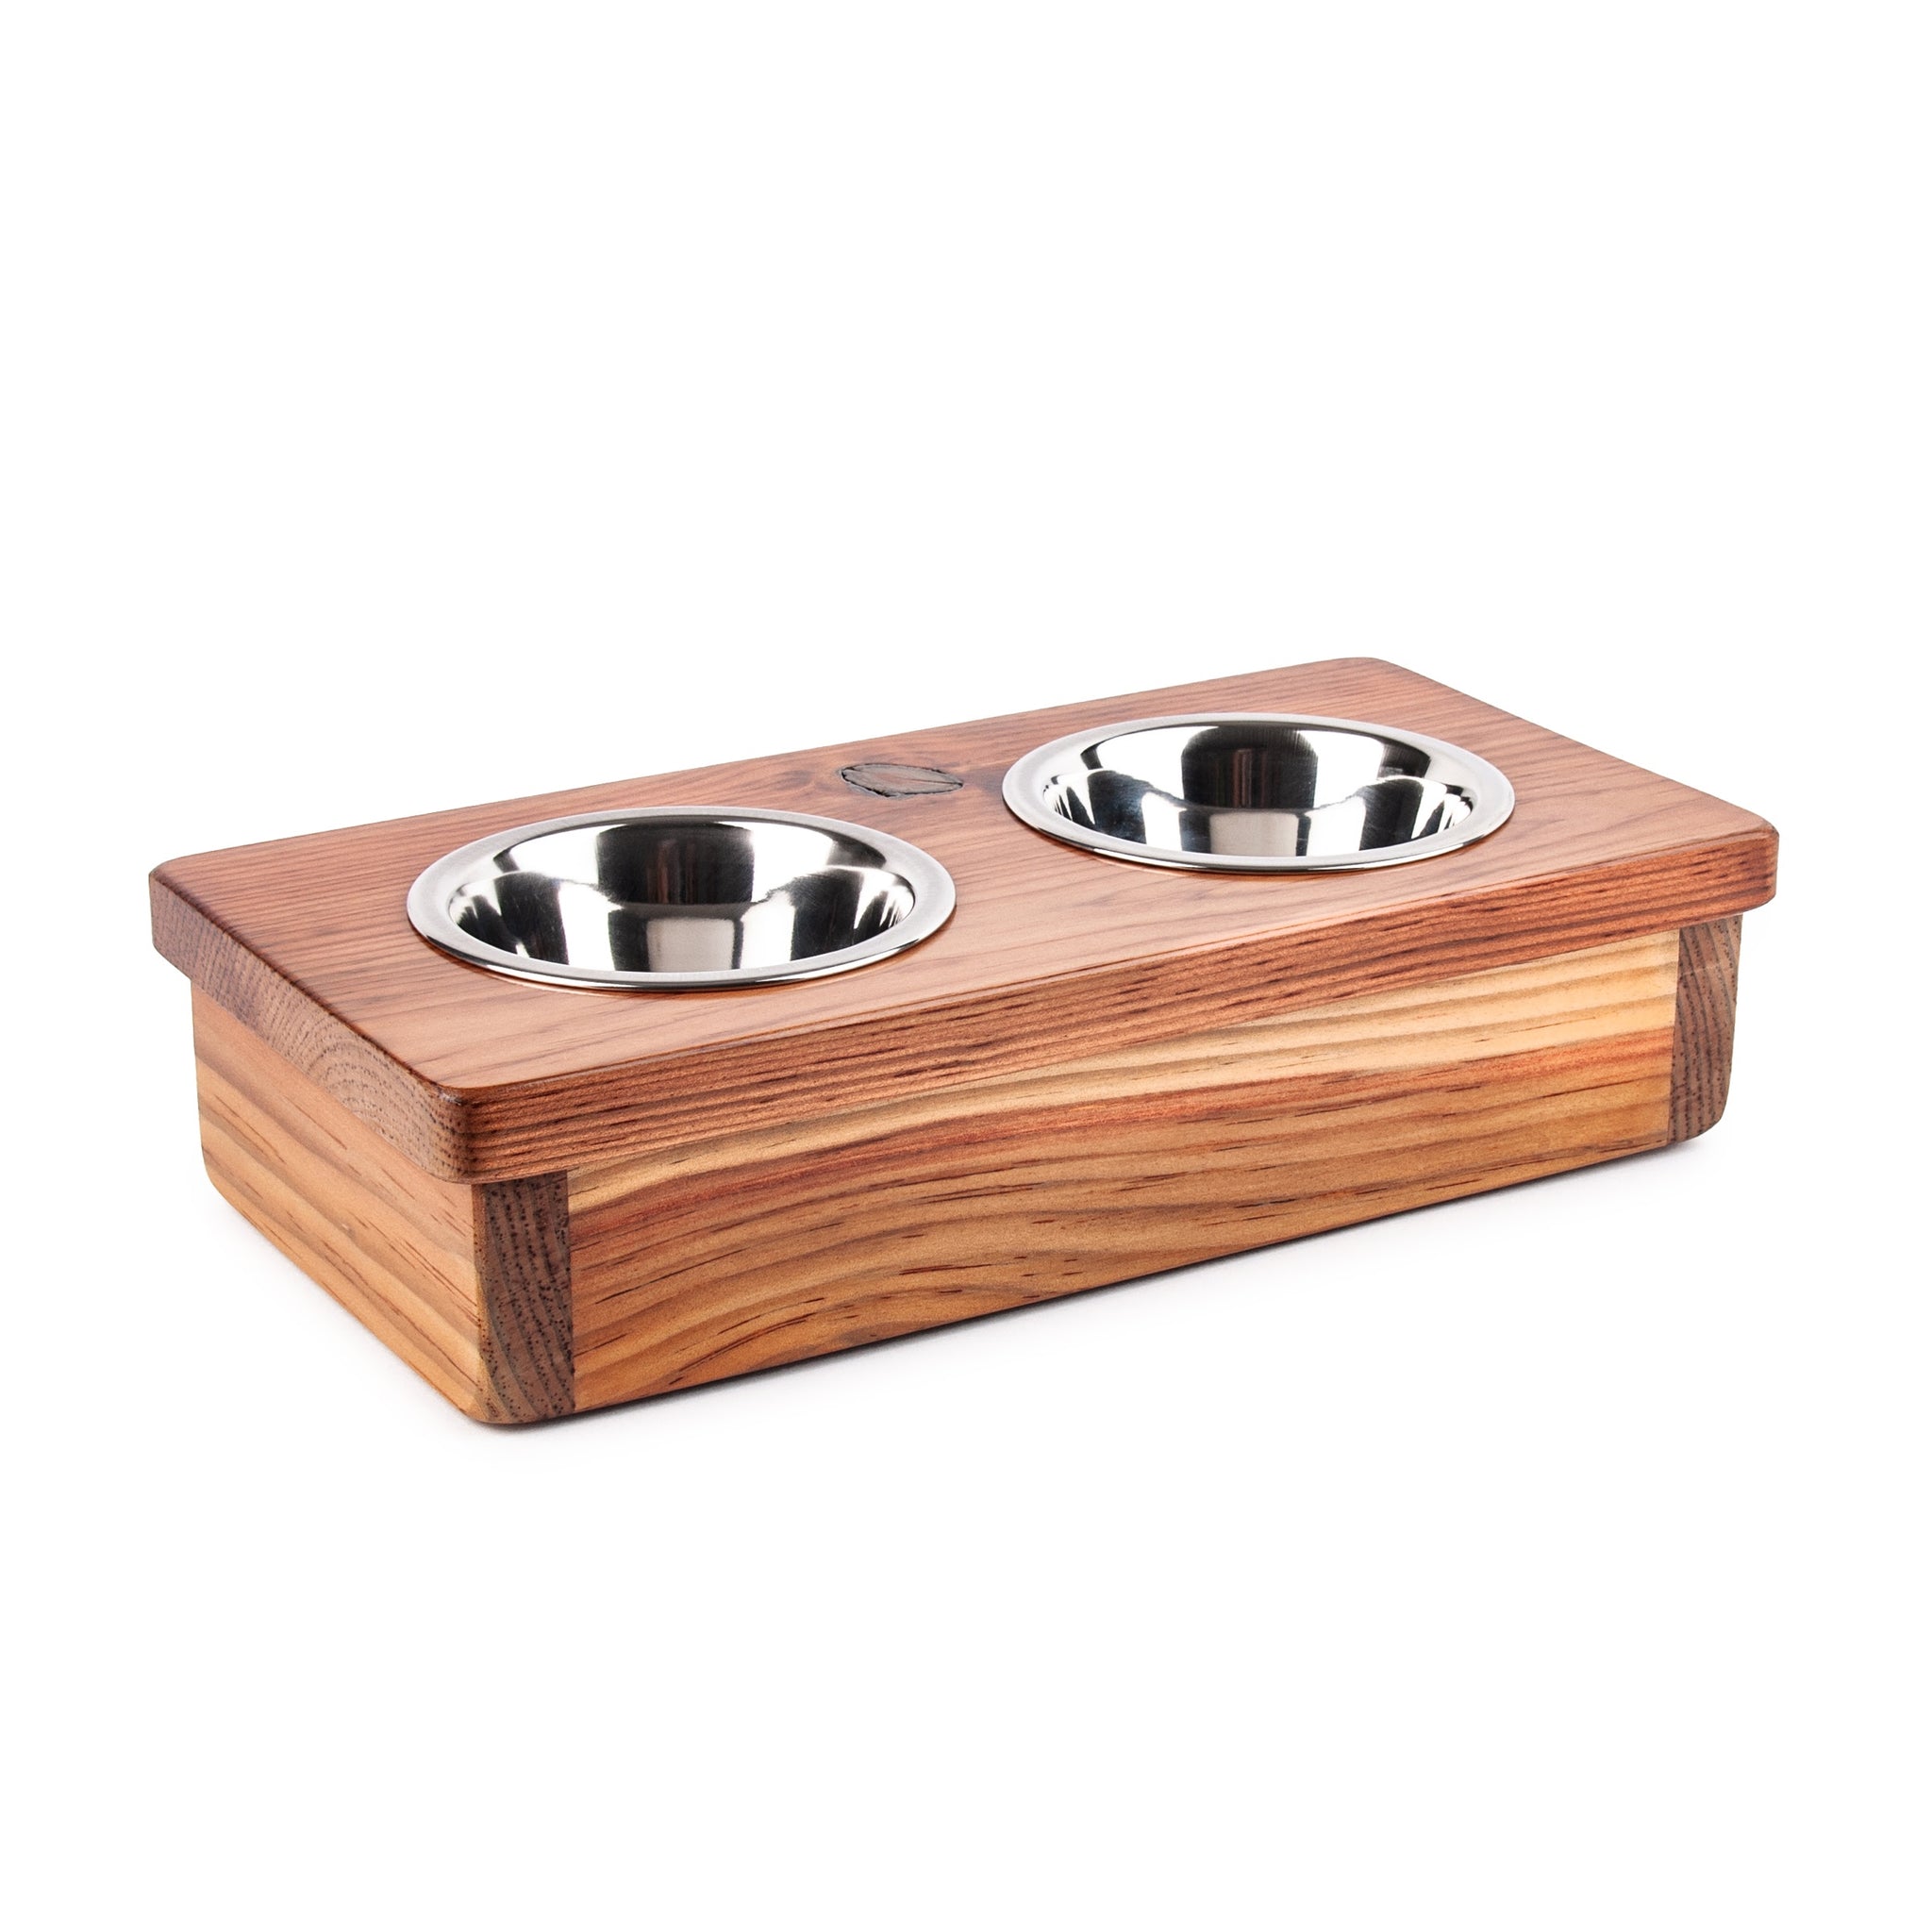 Tiny Dog Bowls, Small Dog, Teacup dog, feeding station – Ozarks Fehr Trade  Originals, LLC